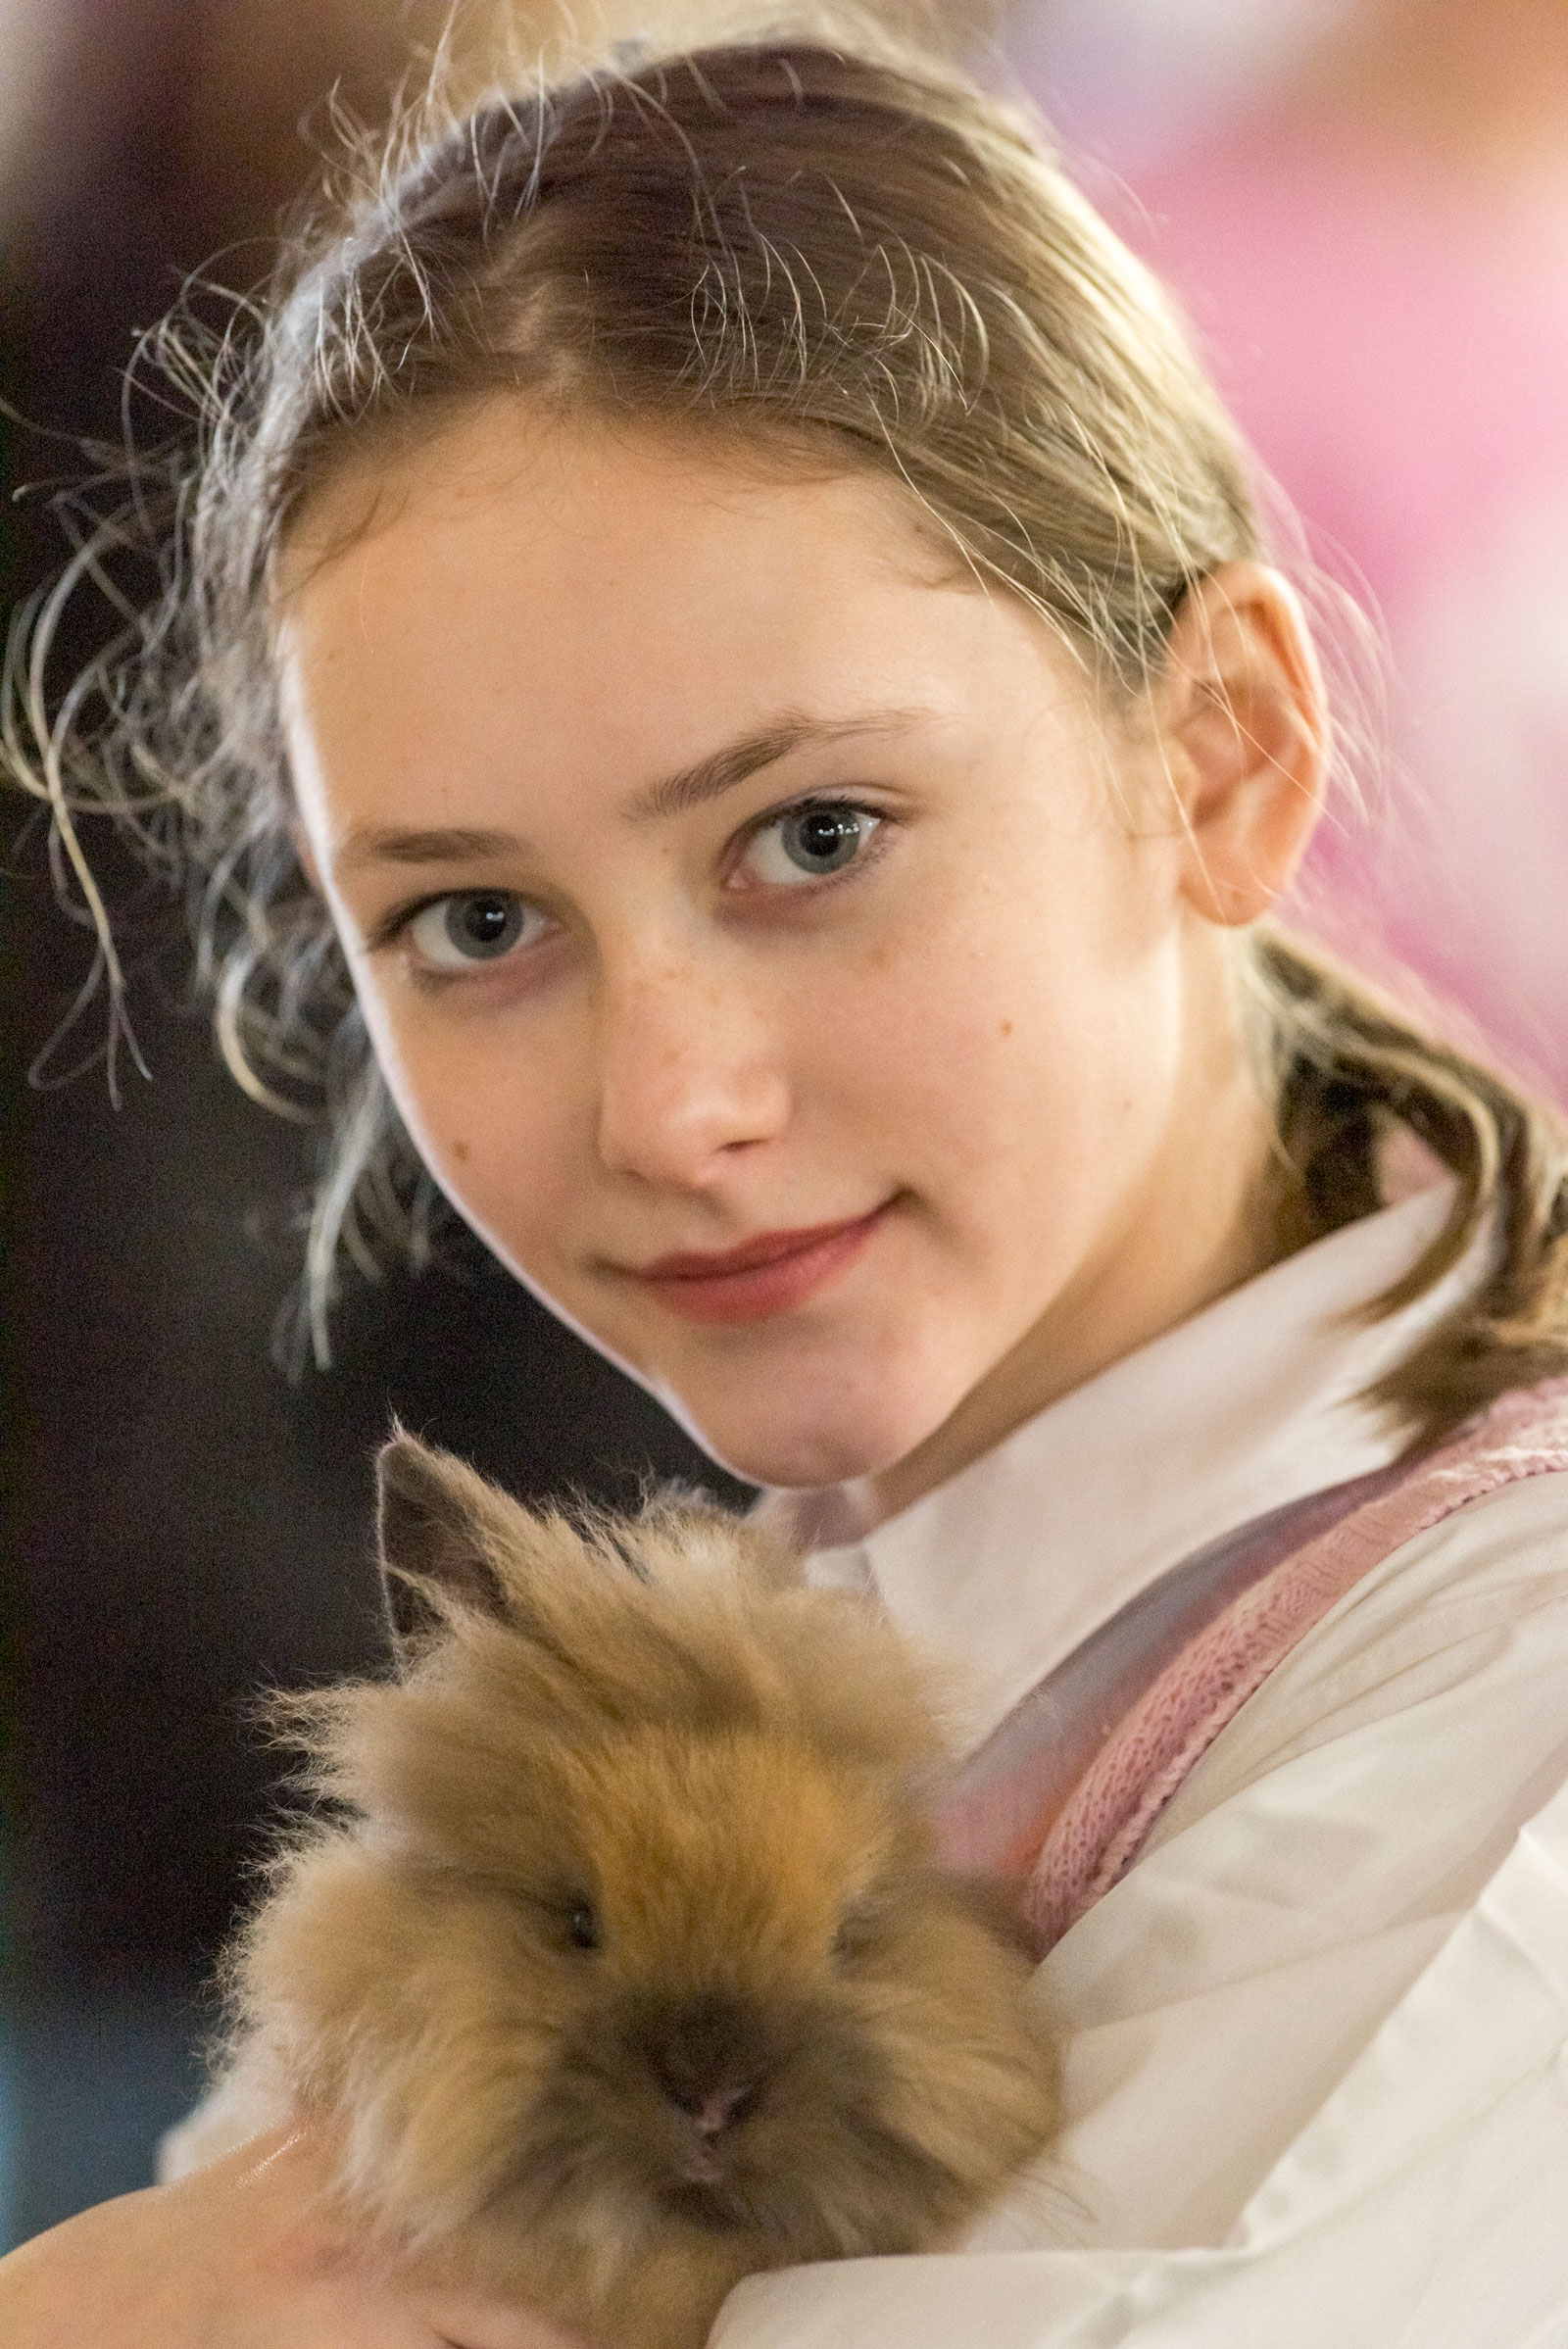 A girl holding a rabbit.